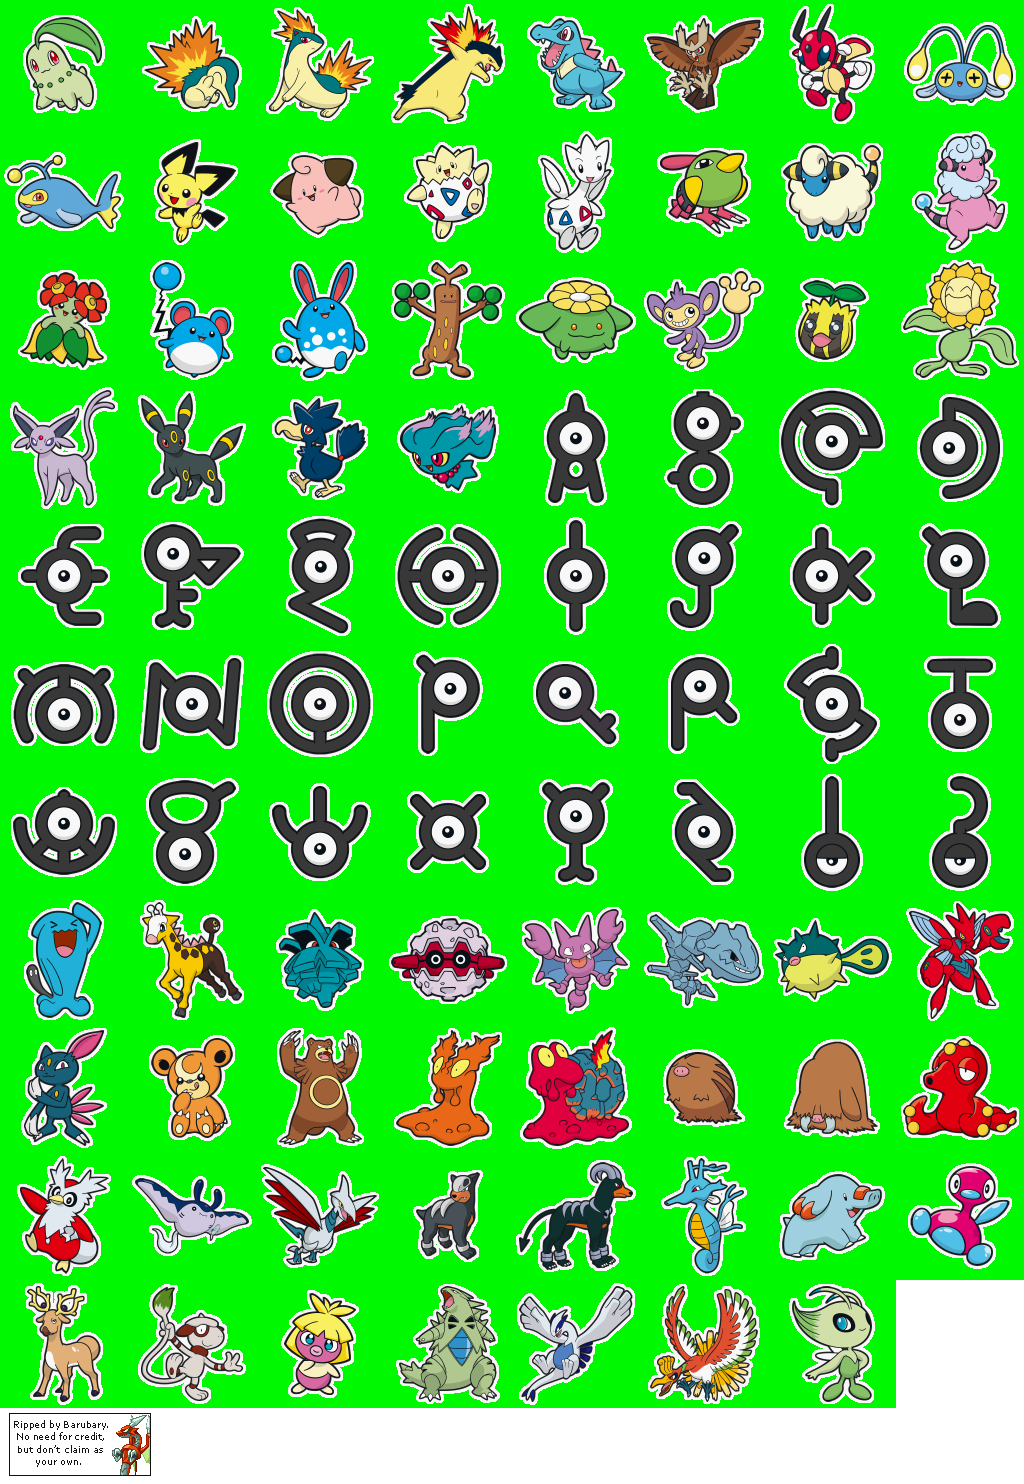 Learn with Pokémon: Typing Adventure - Pokémon Stickers (2nd Generation)